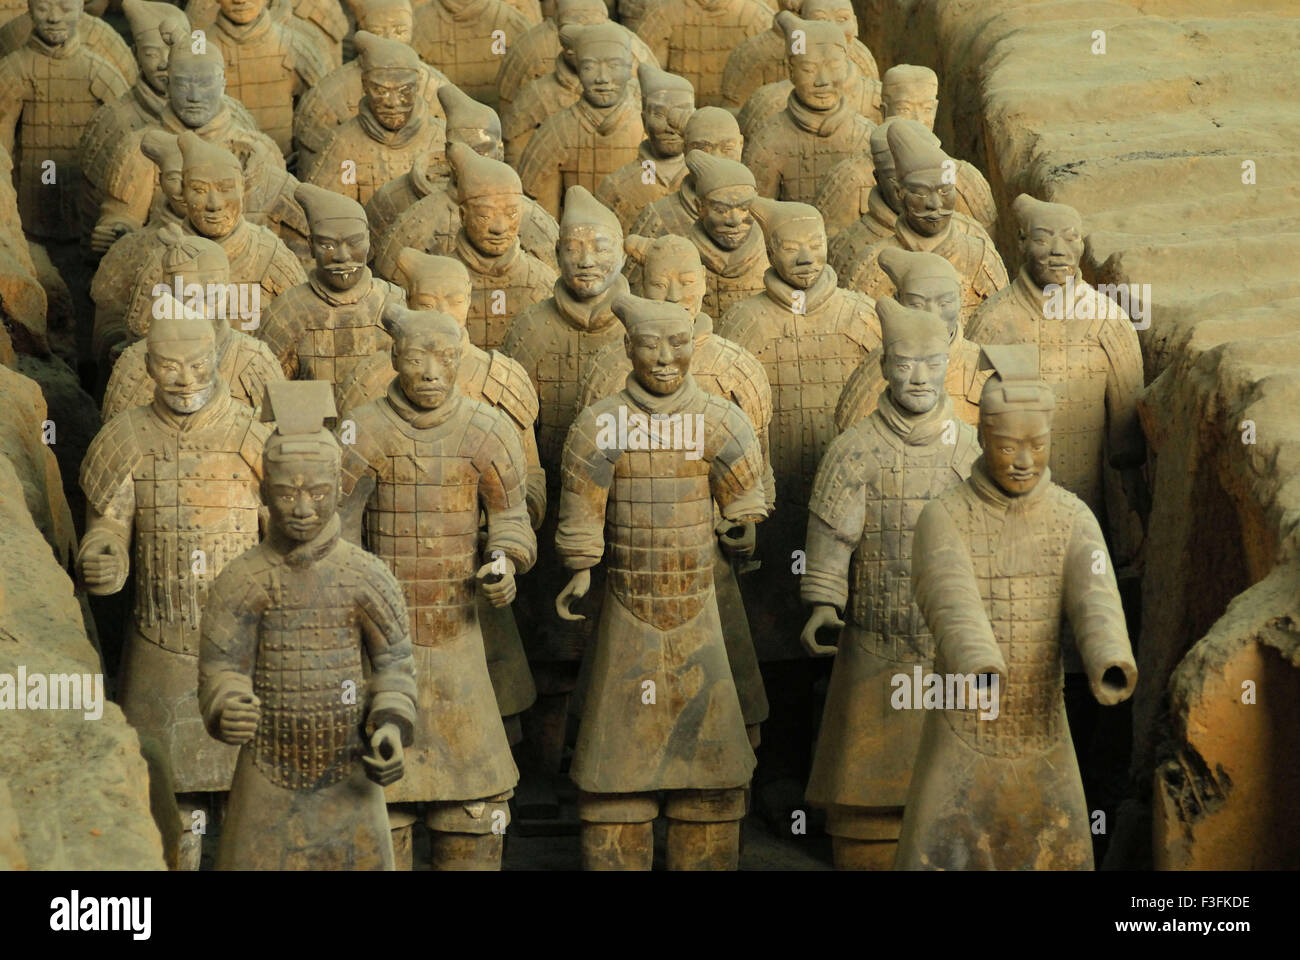 Le statue dei Guerrieri di terracotta in buca 1 ; Esercito di Terracotta ; dinastia Qin ; Xian ; Cina Foto Stock